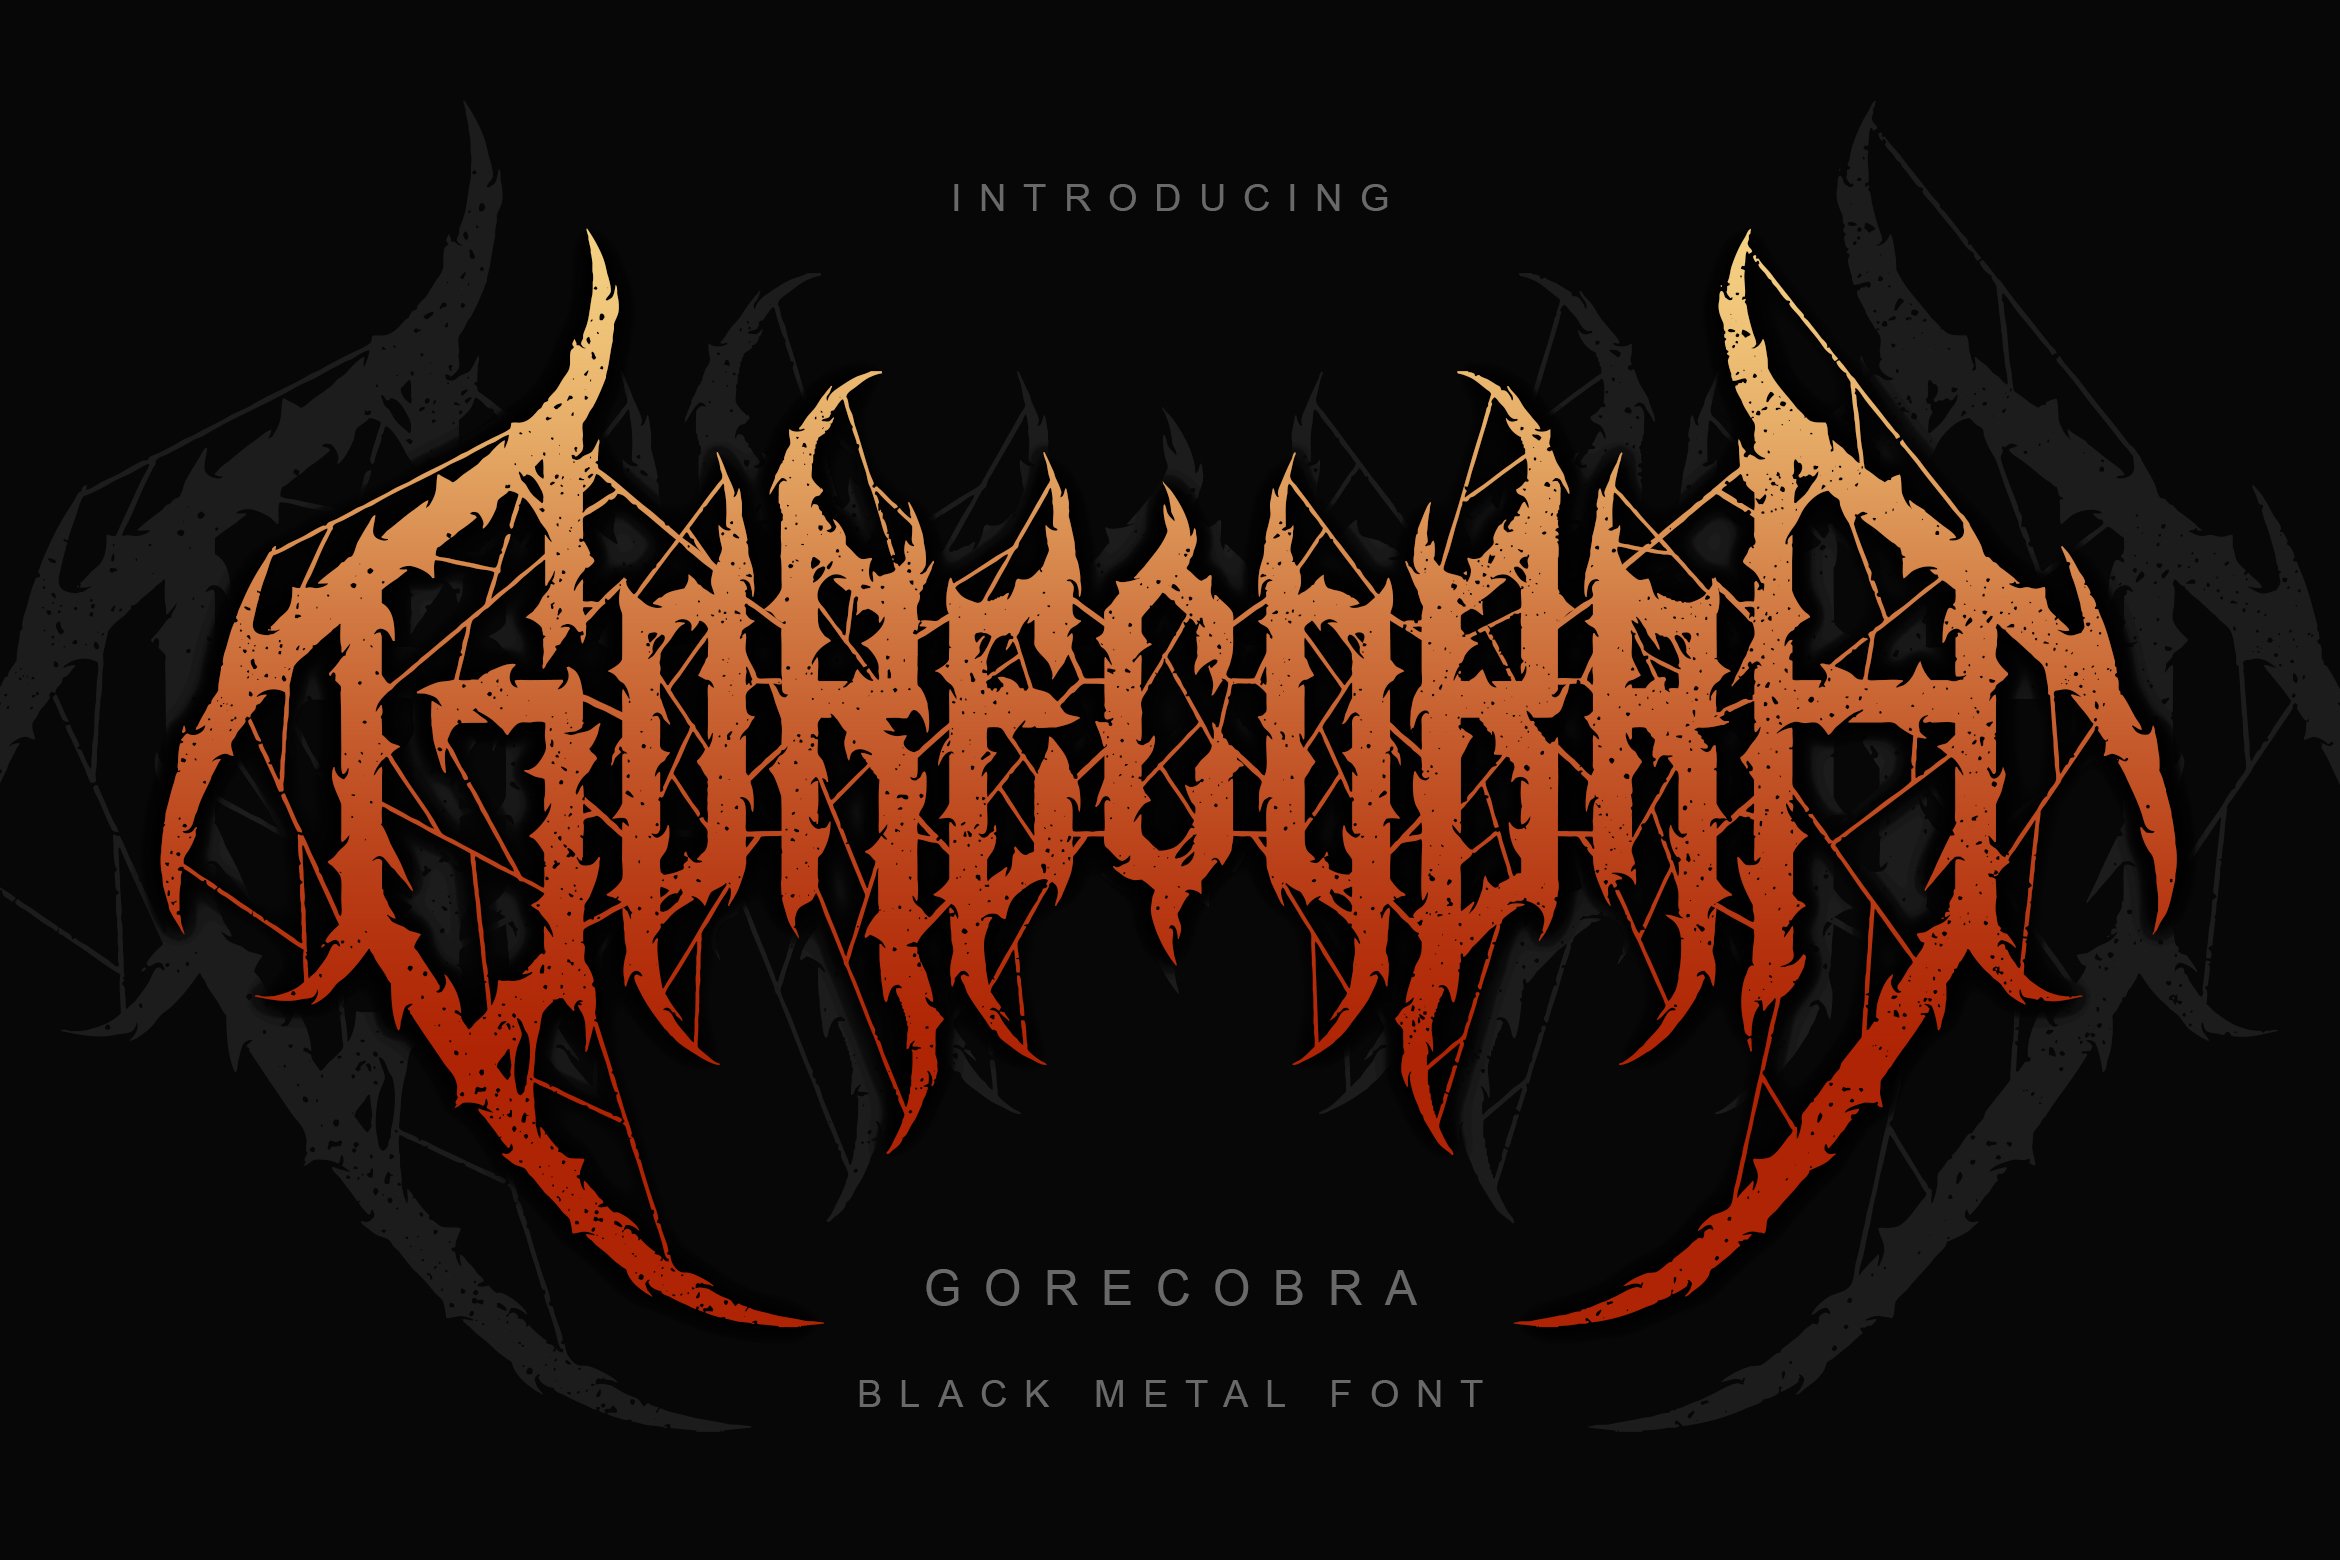 Gorecobra | Black Metal Font Vol. 4 cover image.